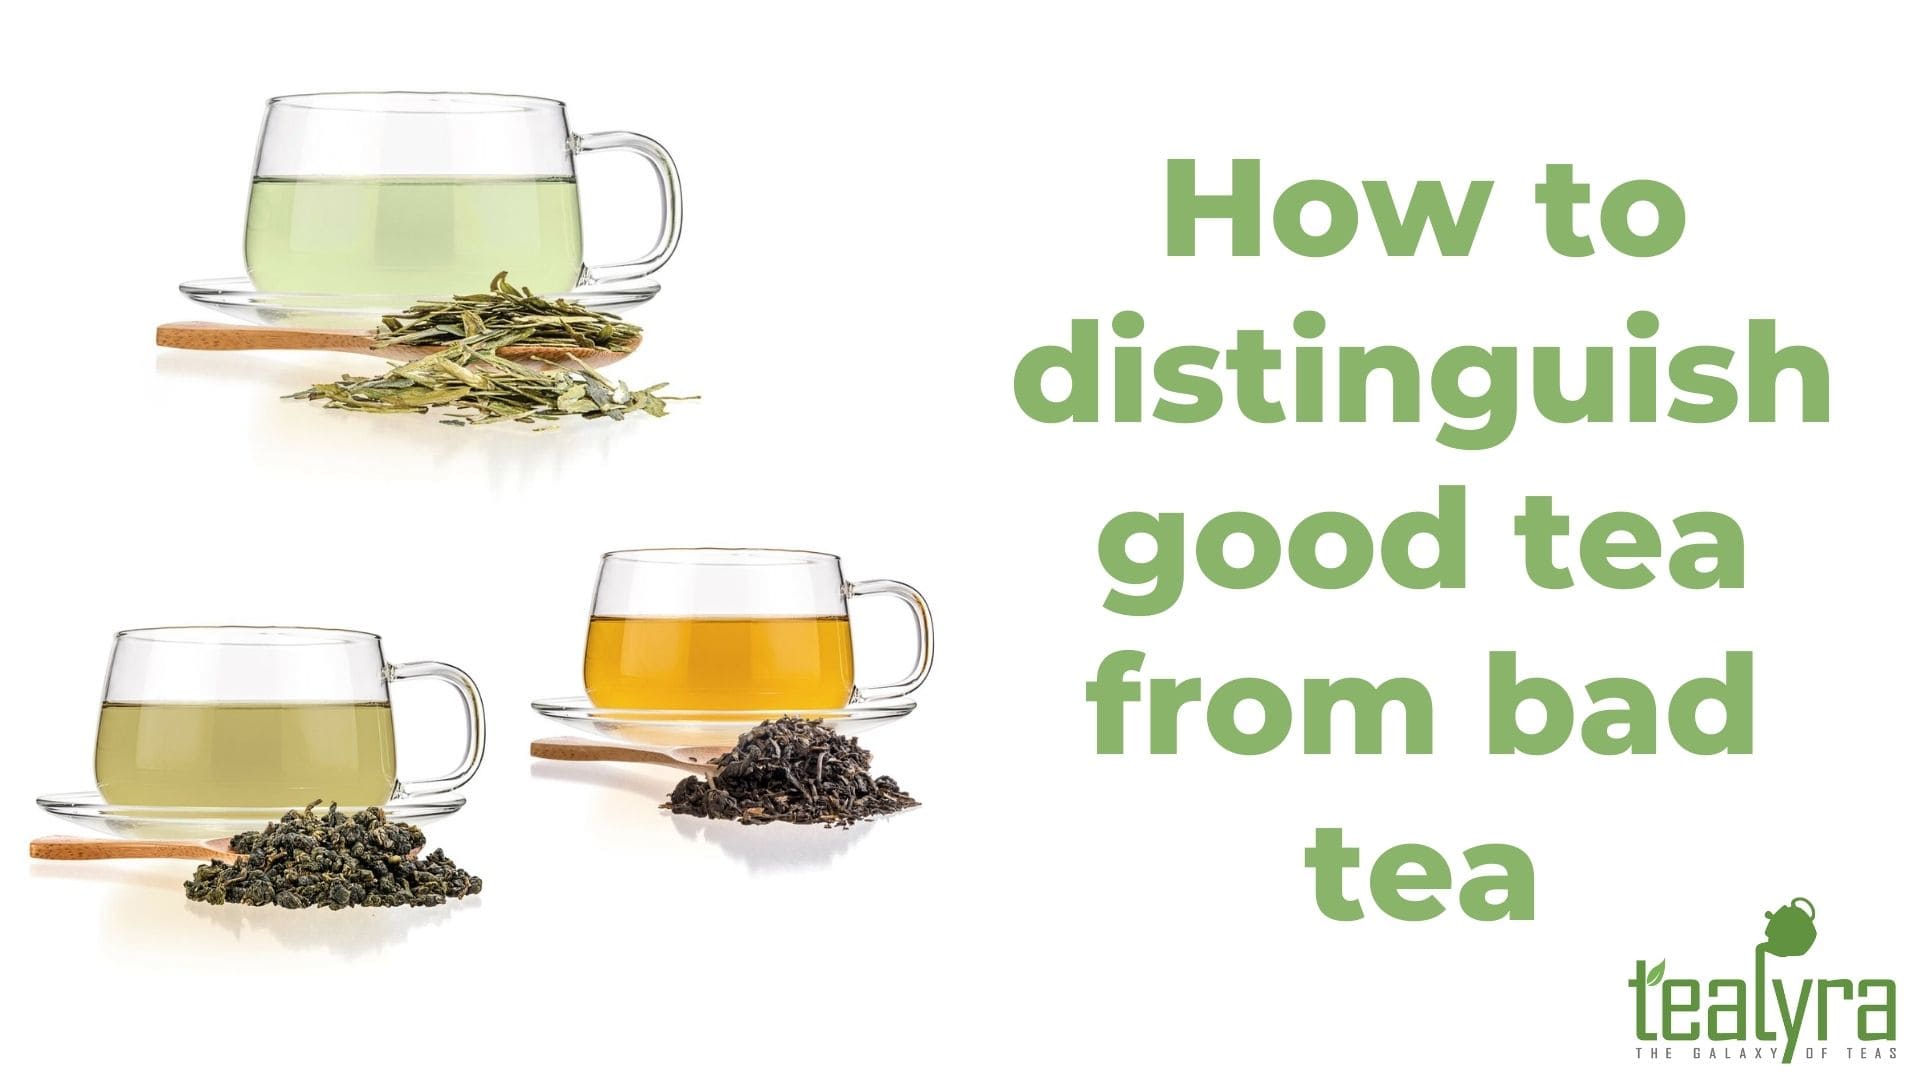 Image-how-to-distinguish-good-tea-from-bad-tea